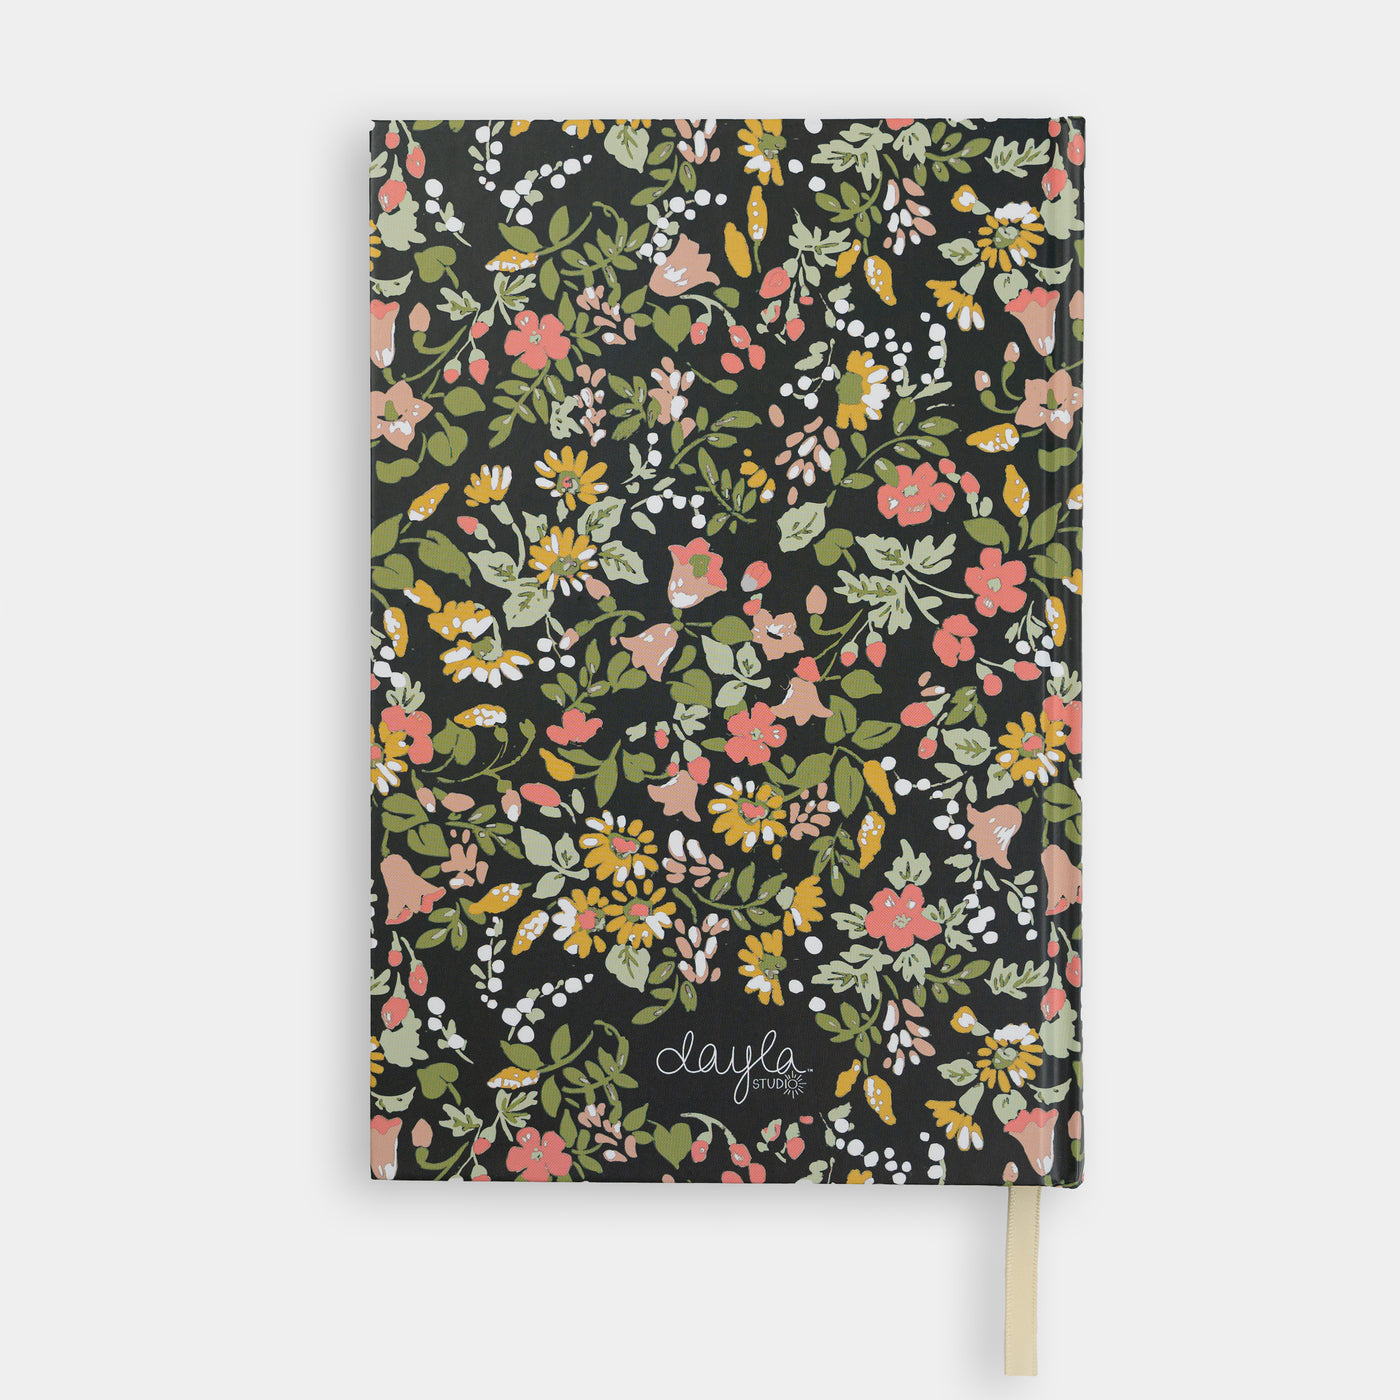 Notebook (Bookbound) - Diana